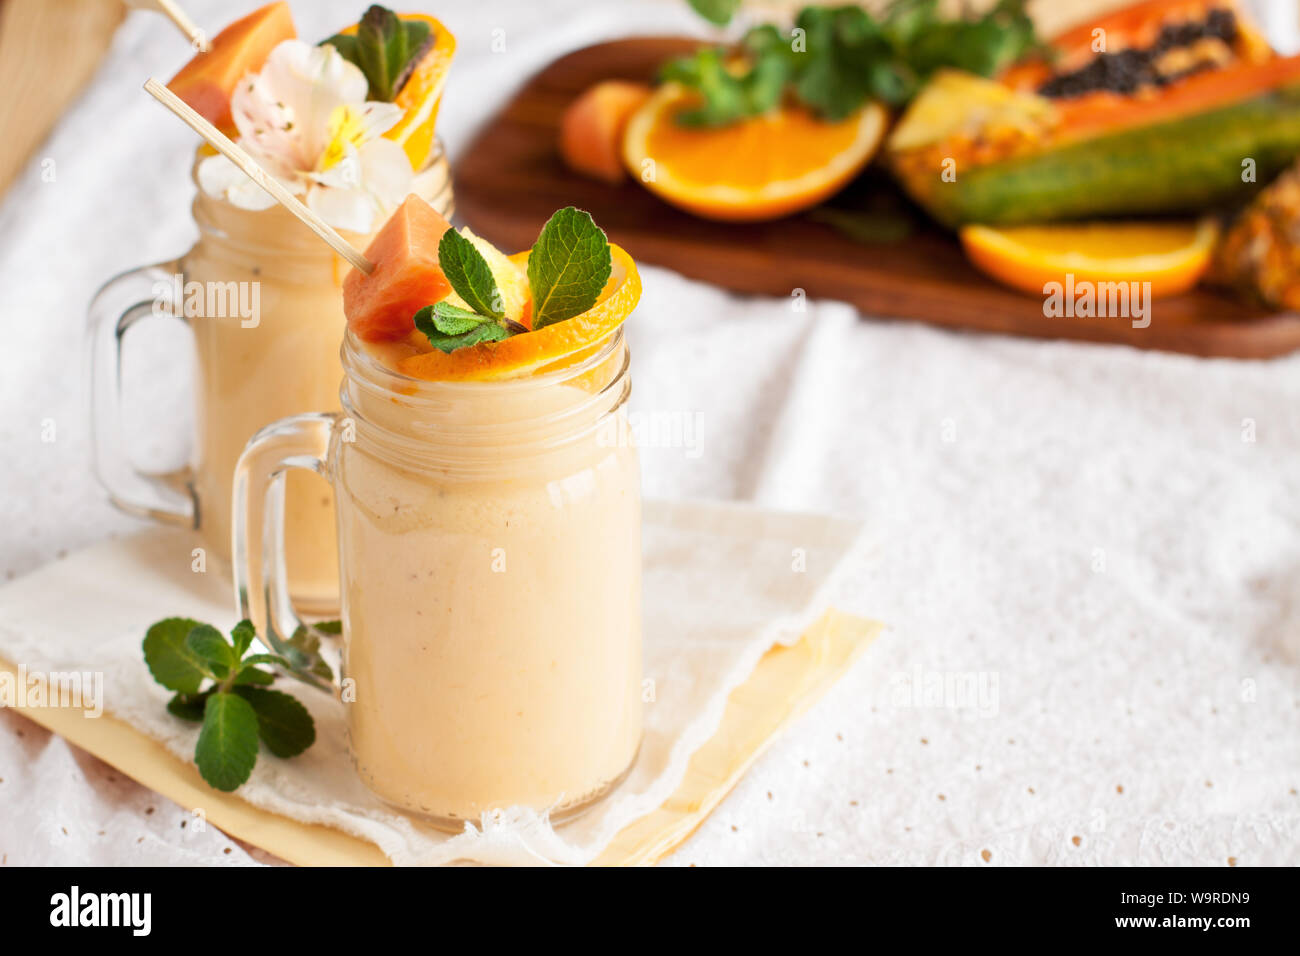 Homemade smoothie with tropical fruits: mango, banana, pineapple, papaya in glass Mason jar. Healthy juicy vitamin drink Stock Photo